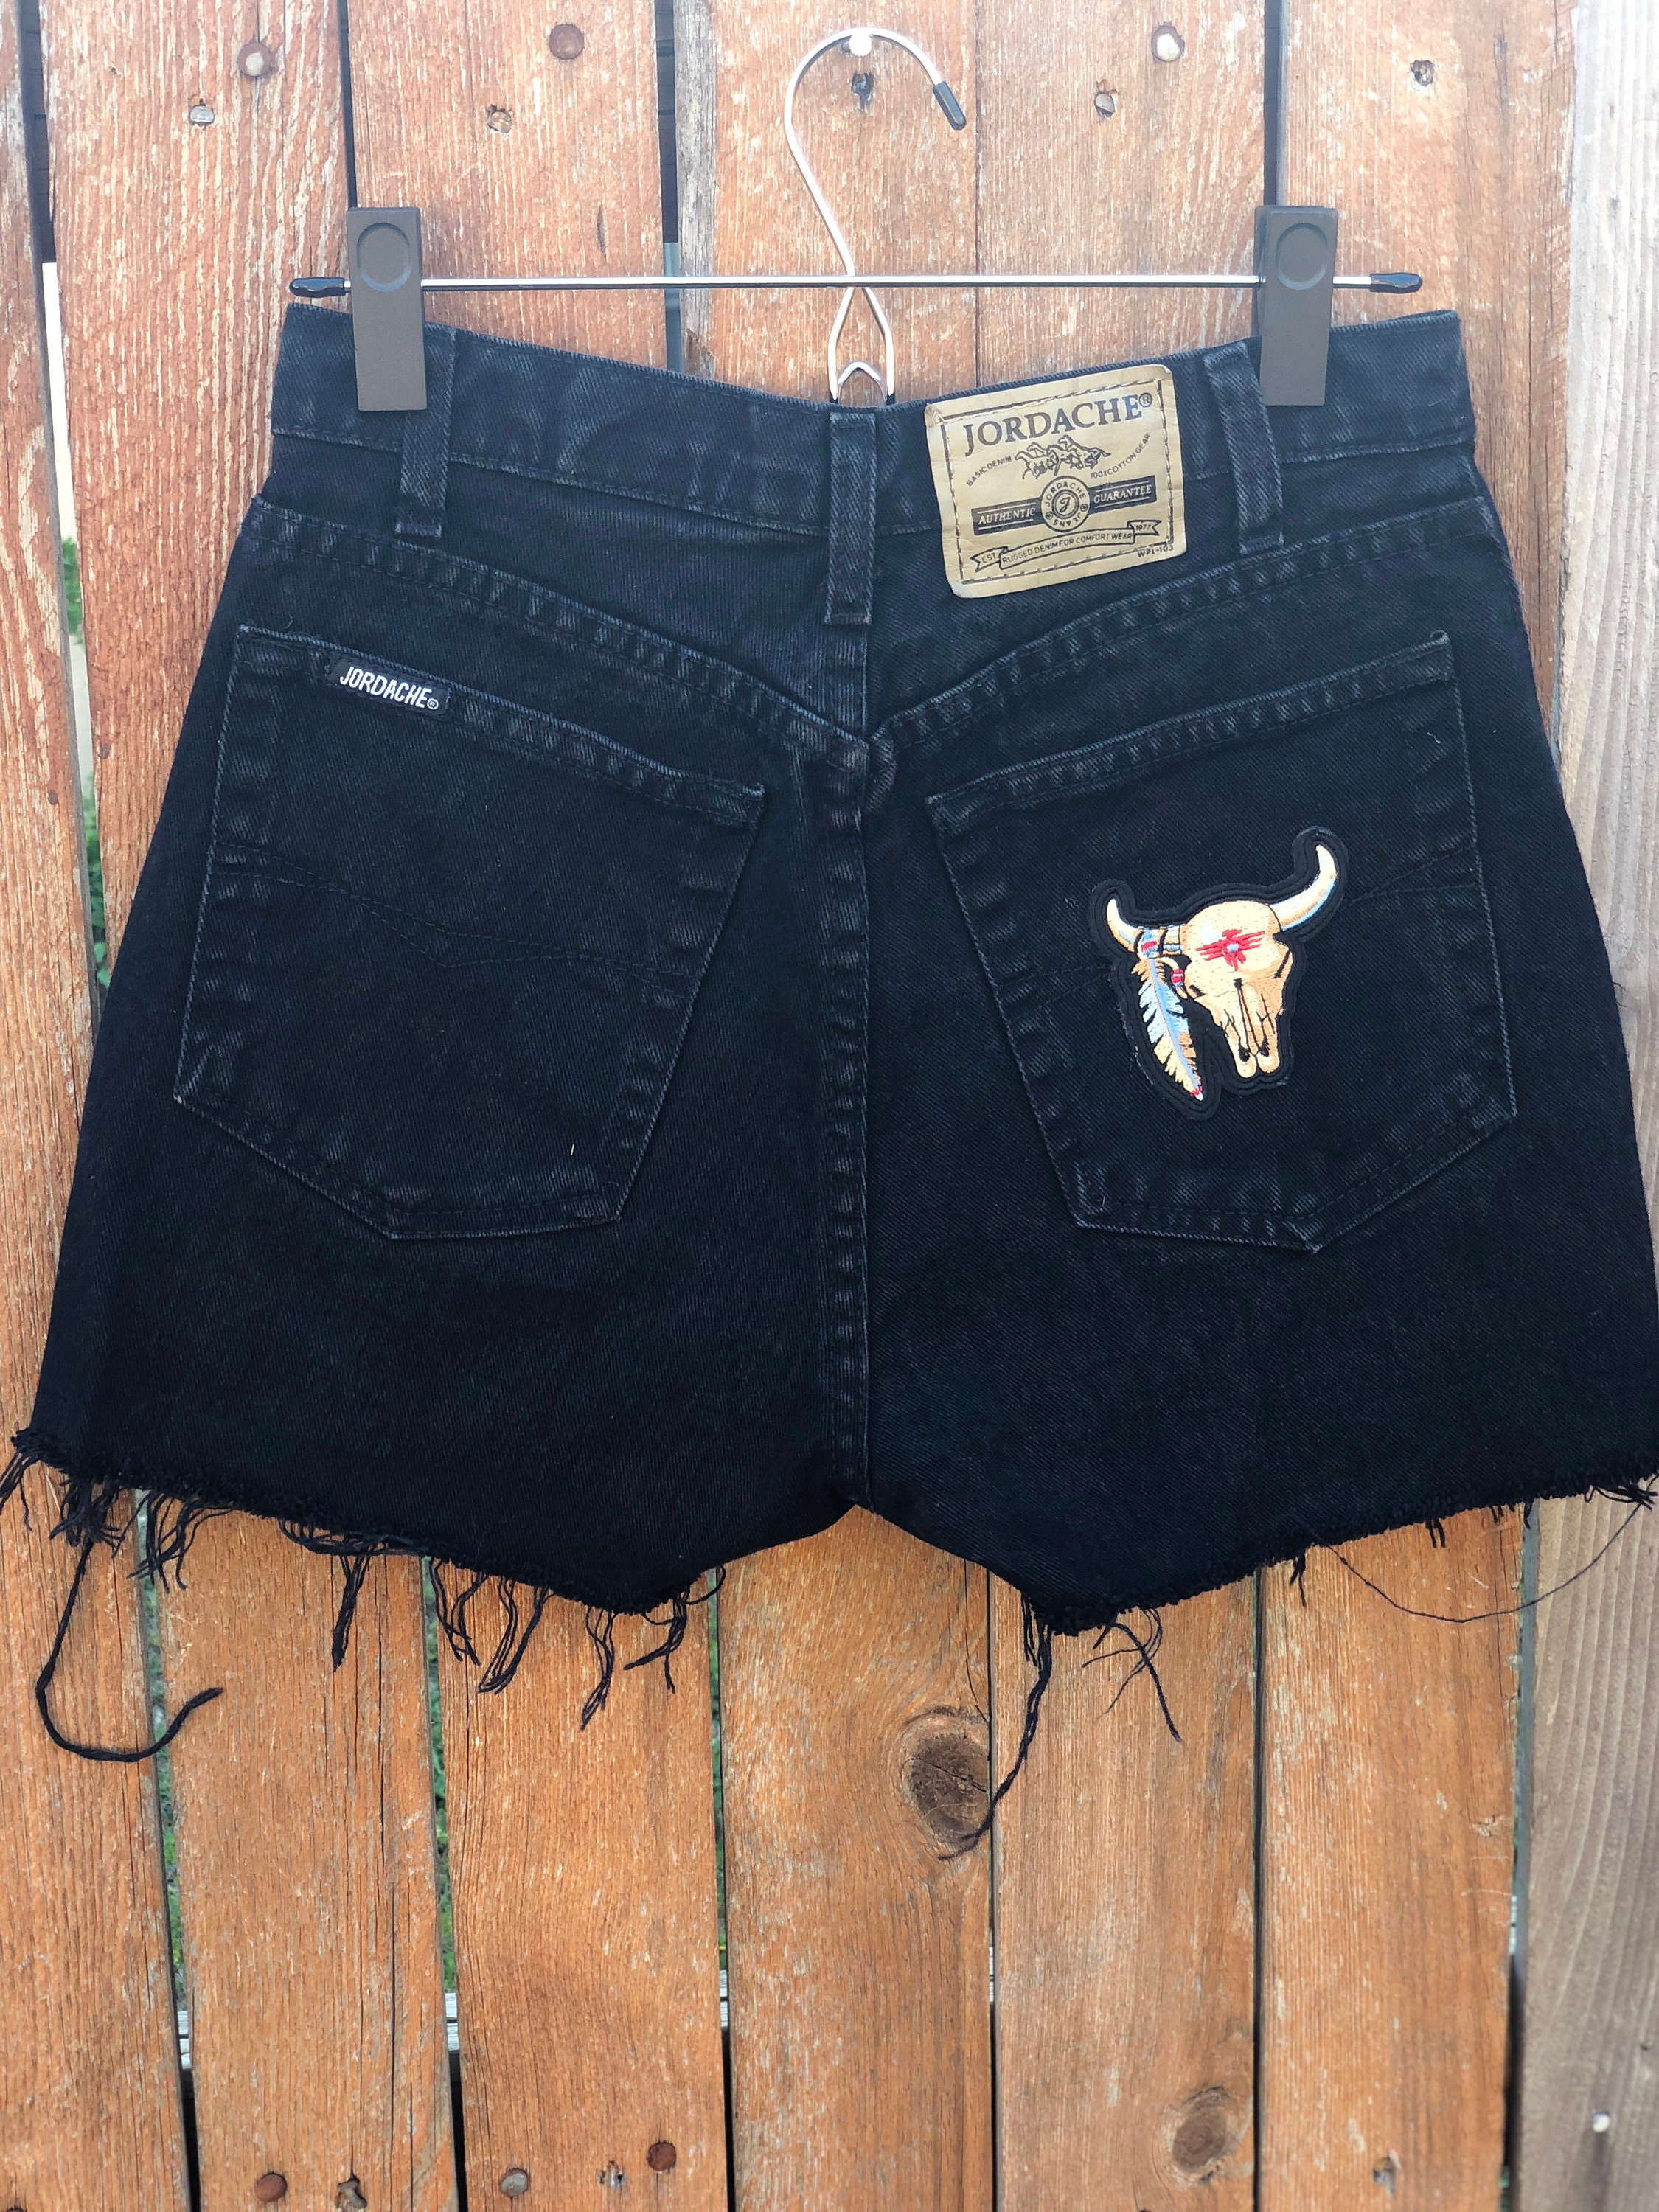 Vintage Jordache Cut off Black Denim High Waisted Shorts Size 4 -   Canada